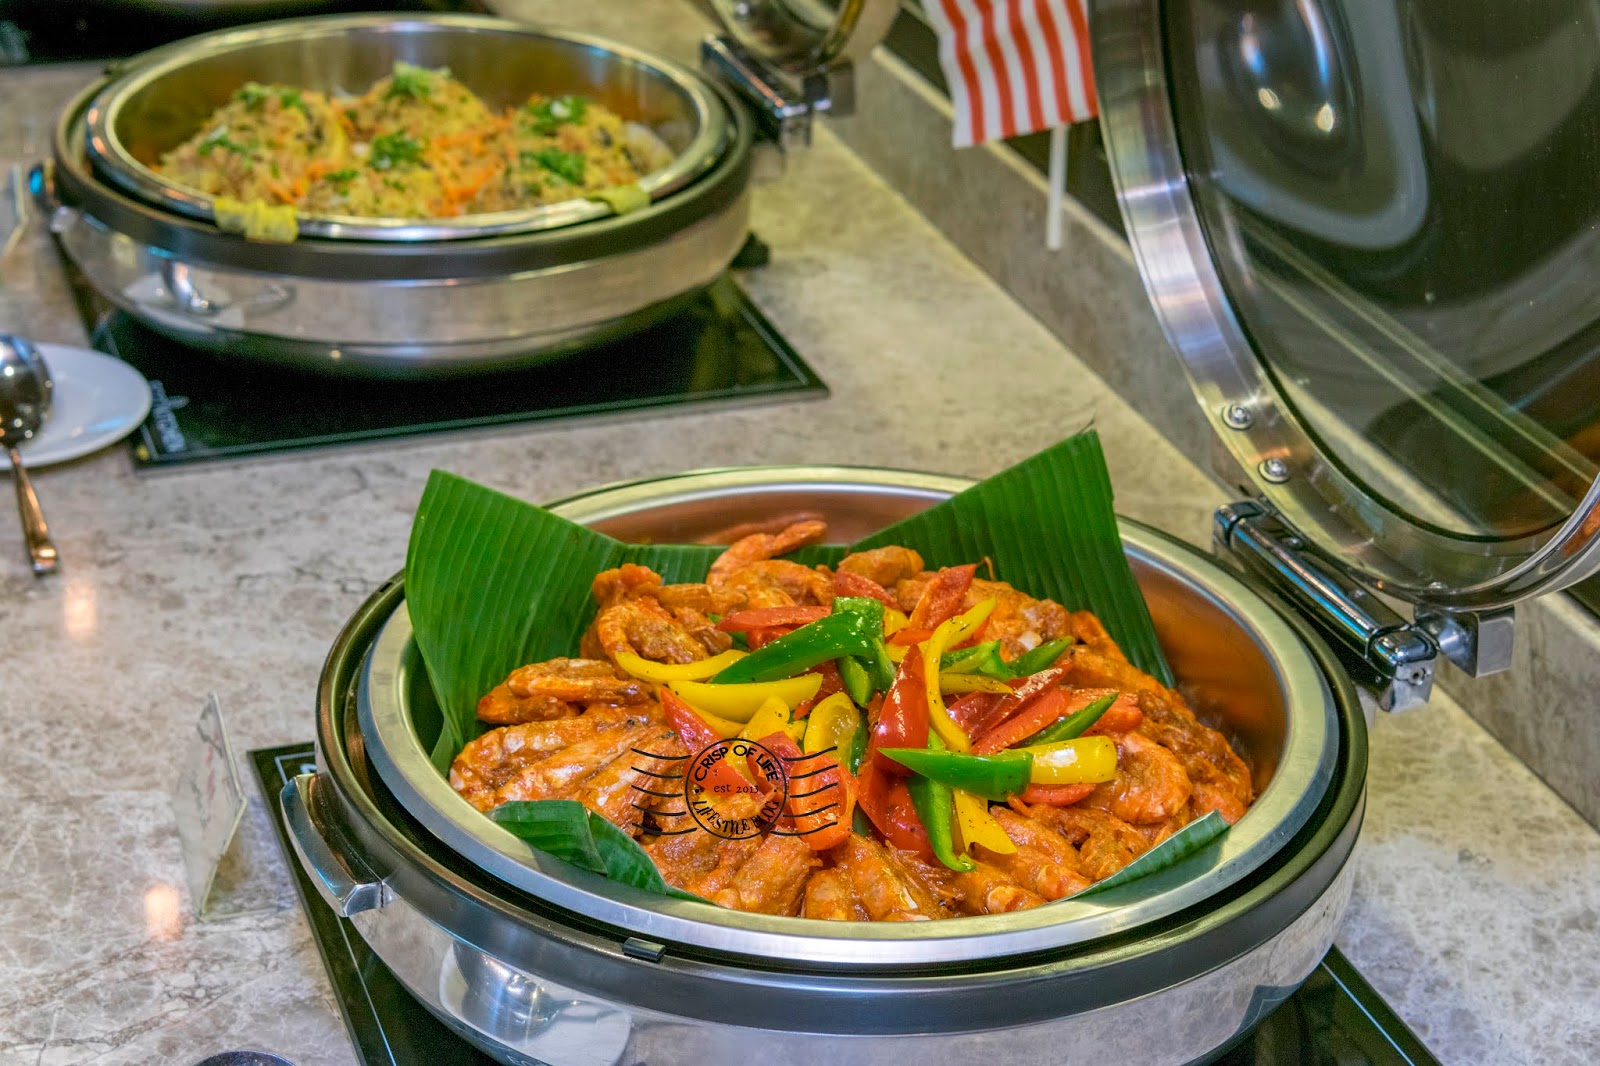 Kochabi Delights Buffet Dinner with Hainanese Cuisine @ Jazz Hotel Penang (Promotion - Buy 3 Free 1)